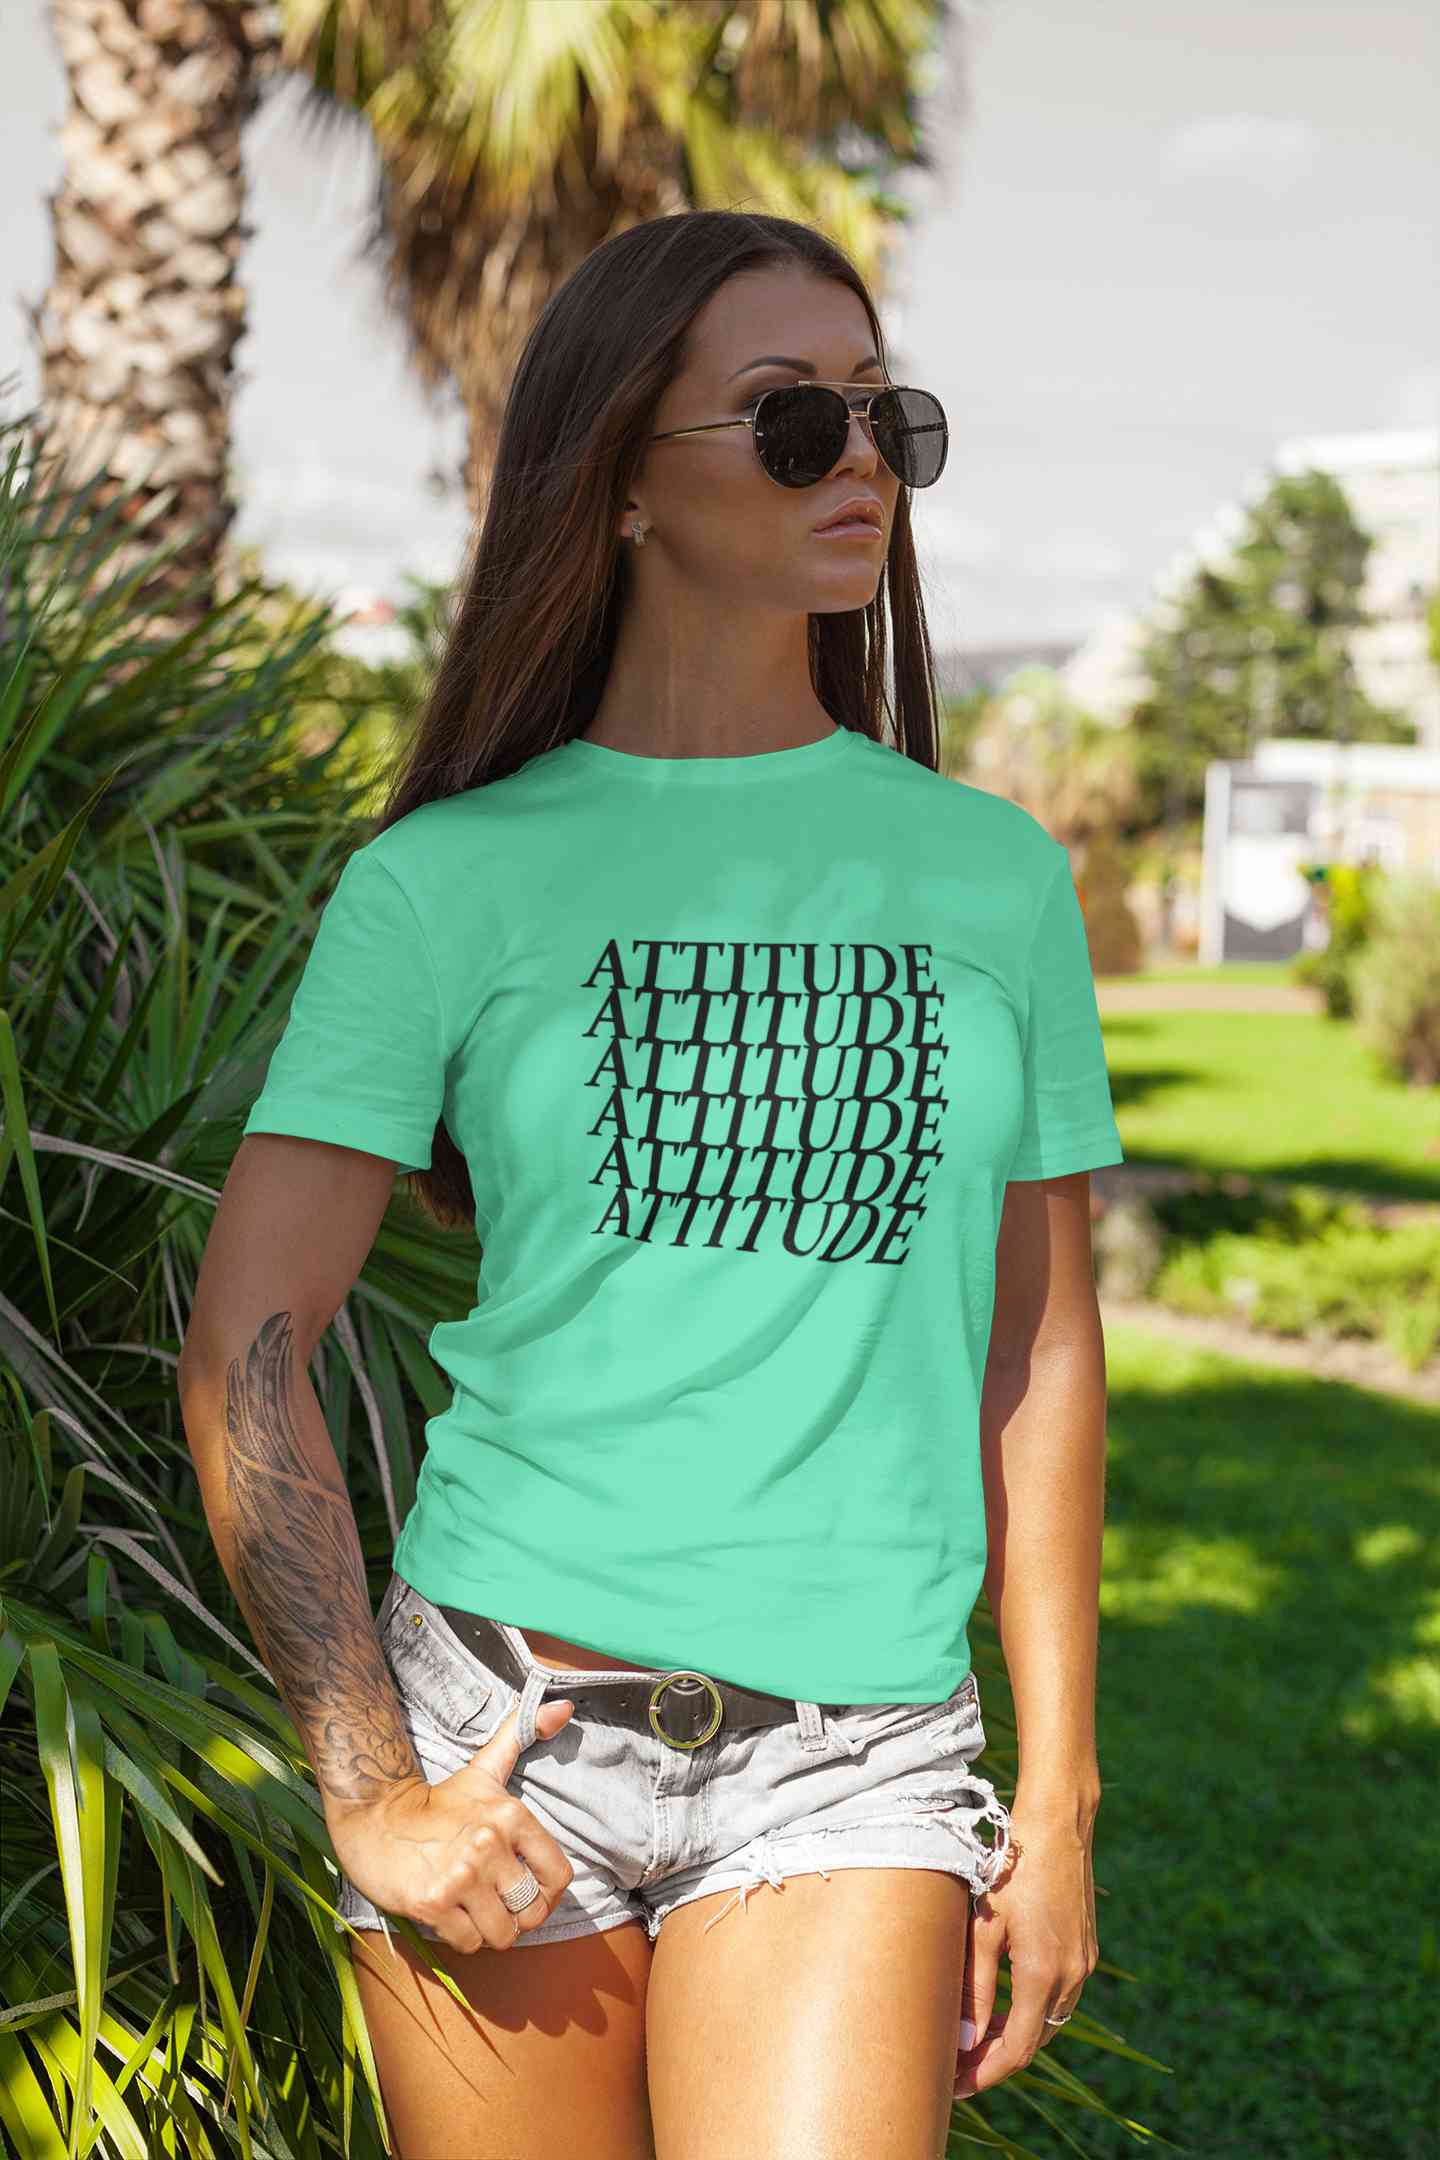 Heart Butterfly Vector Women Half Sleeves T-shirt- FunkyTradition